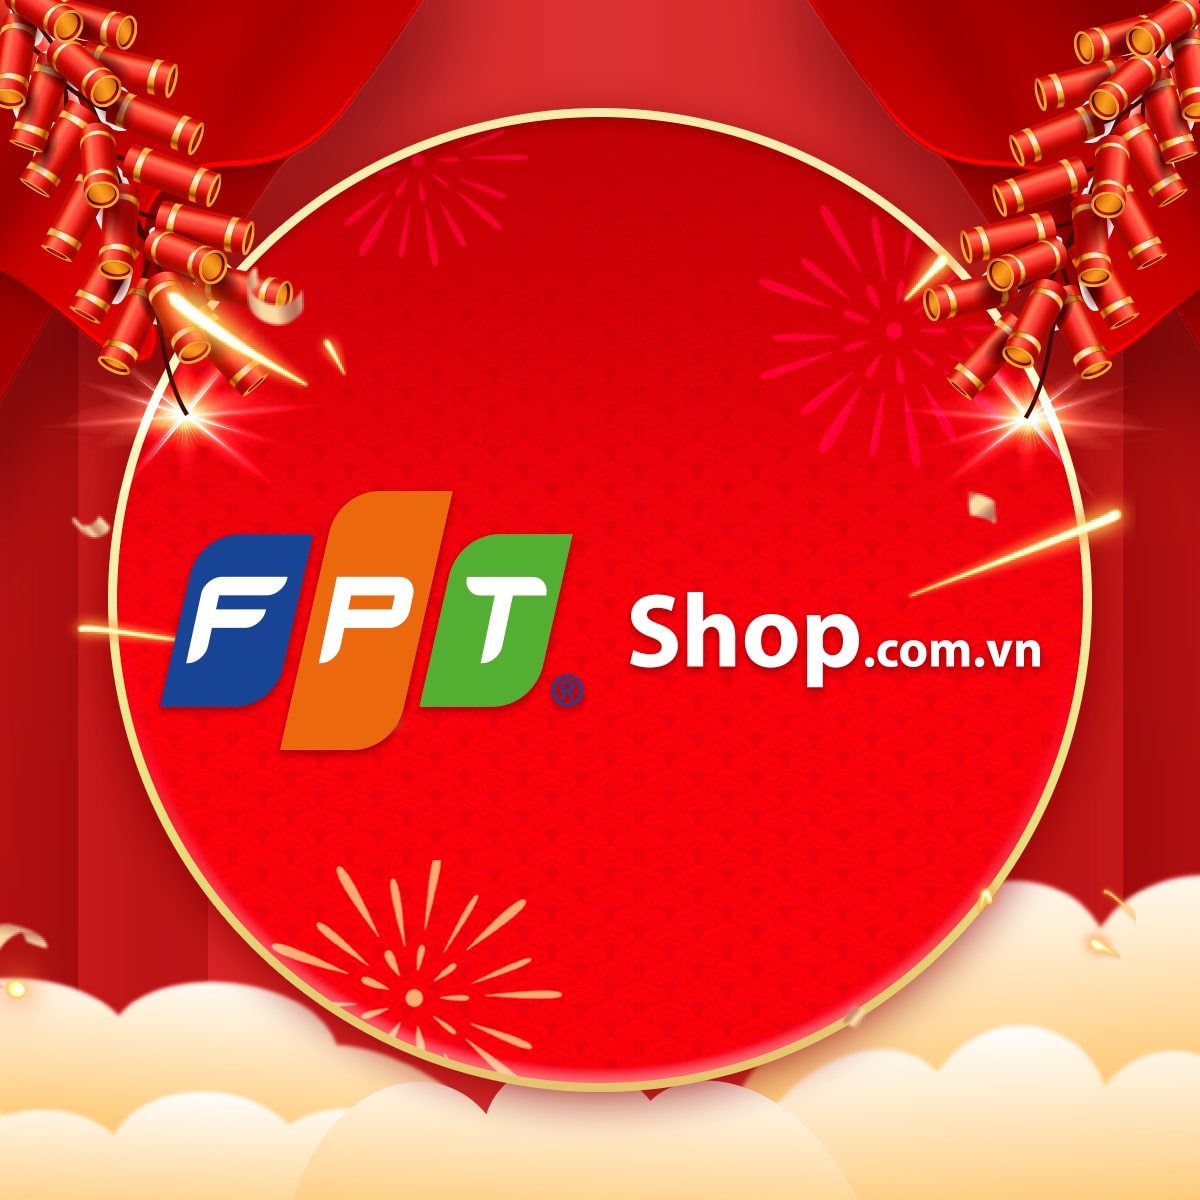 fpt shop logo1.jpg